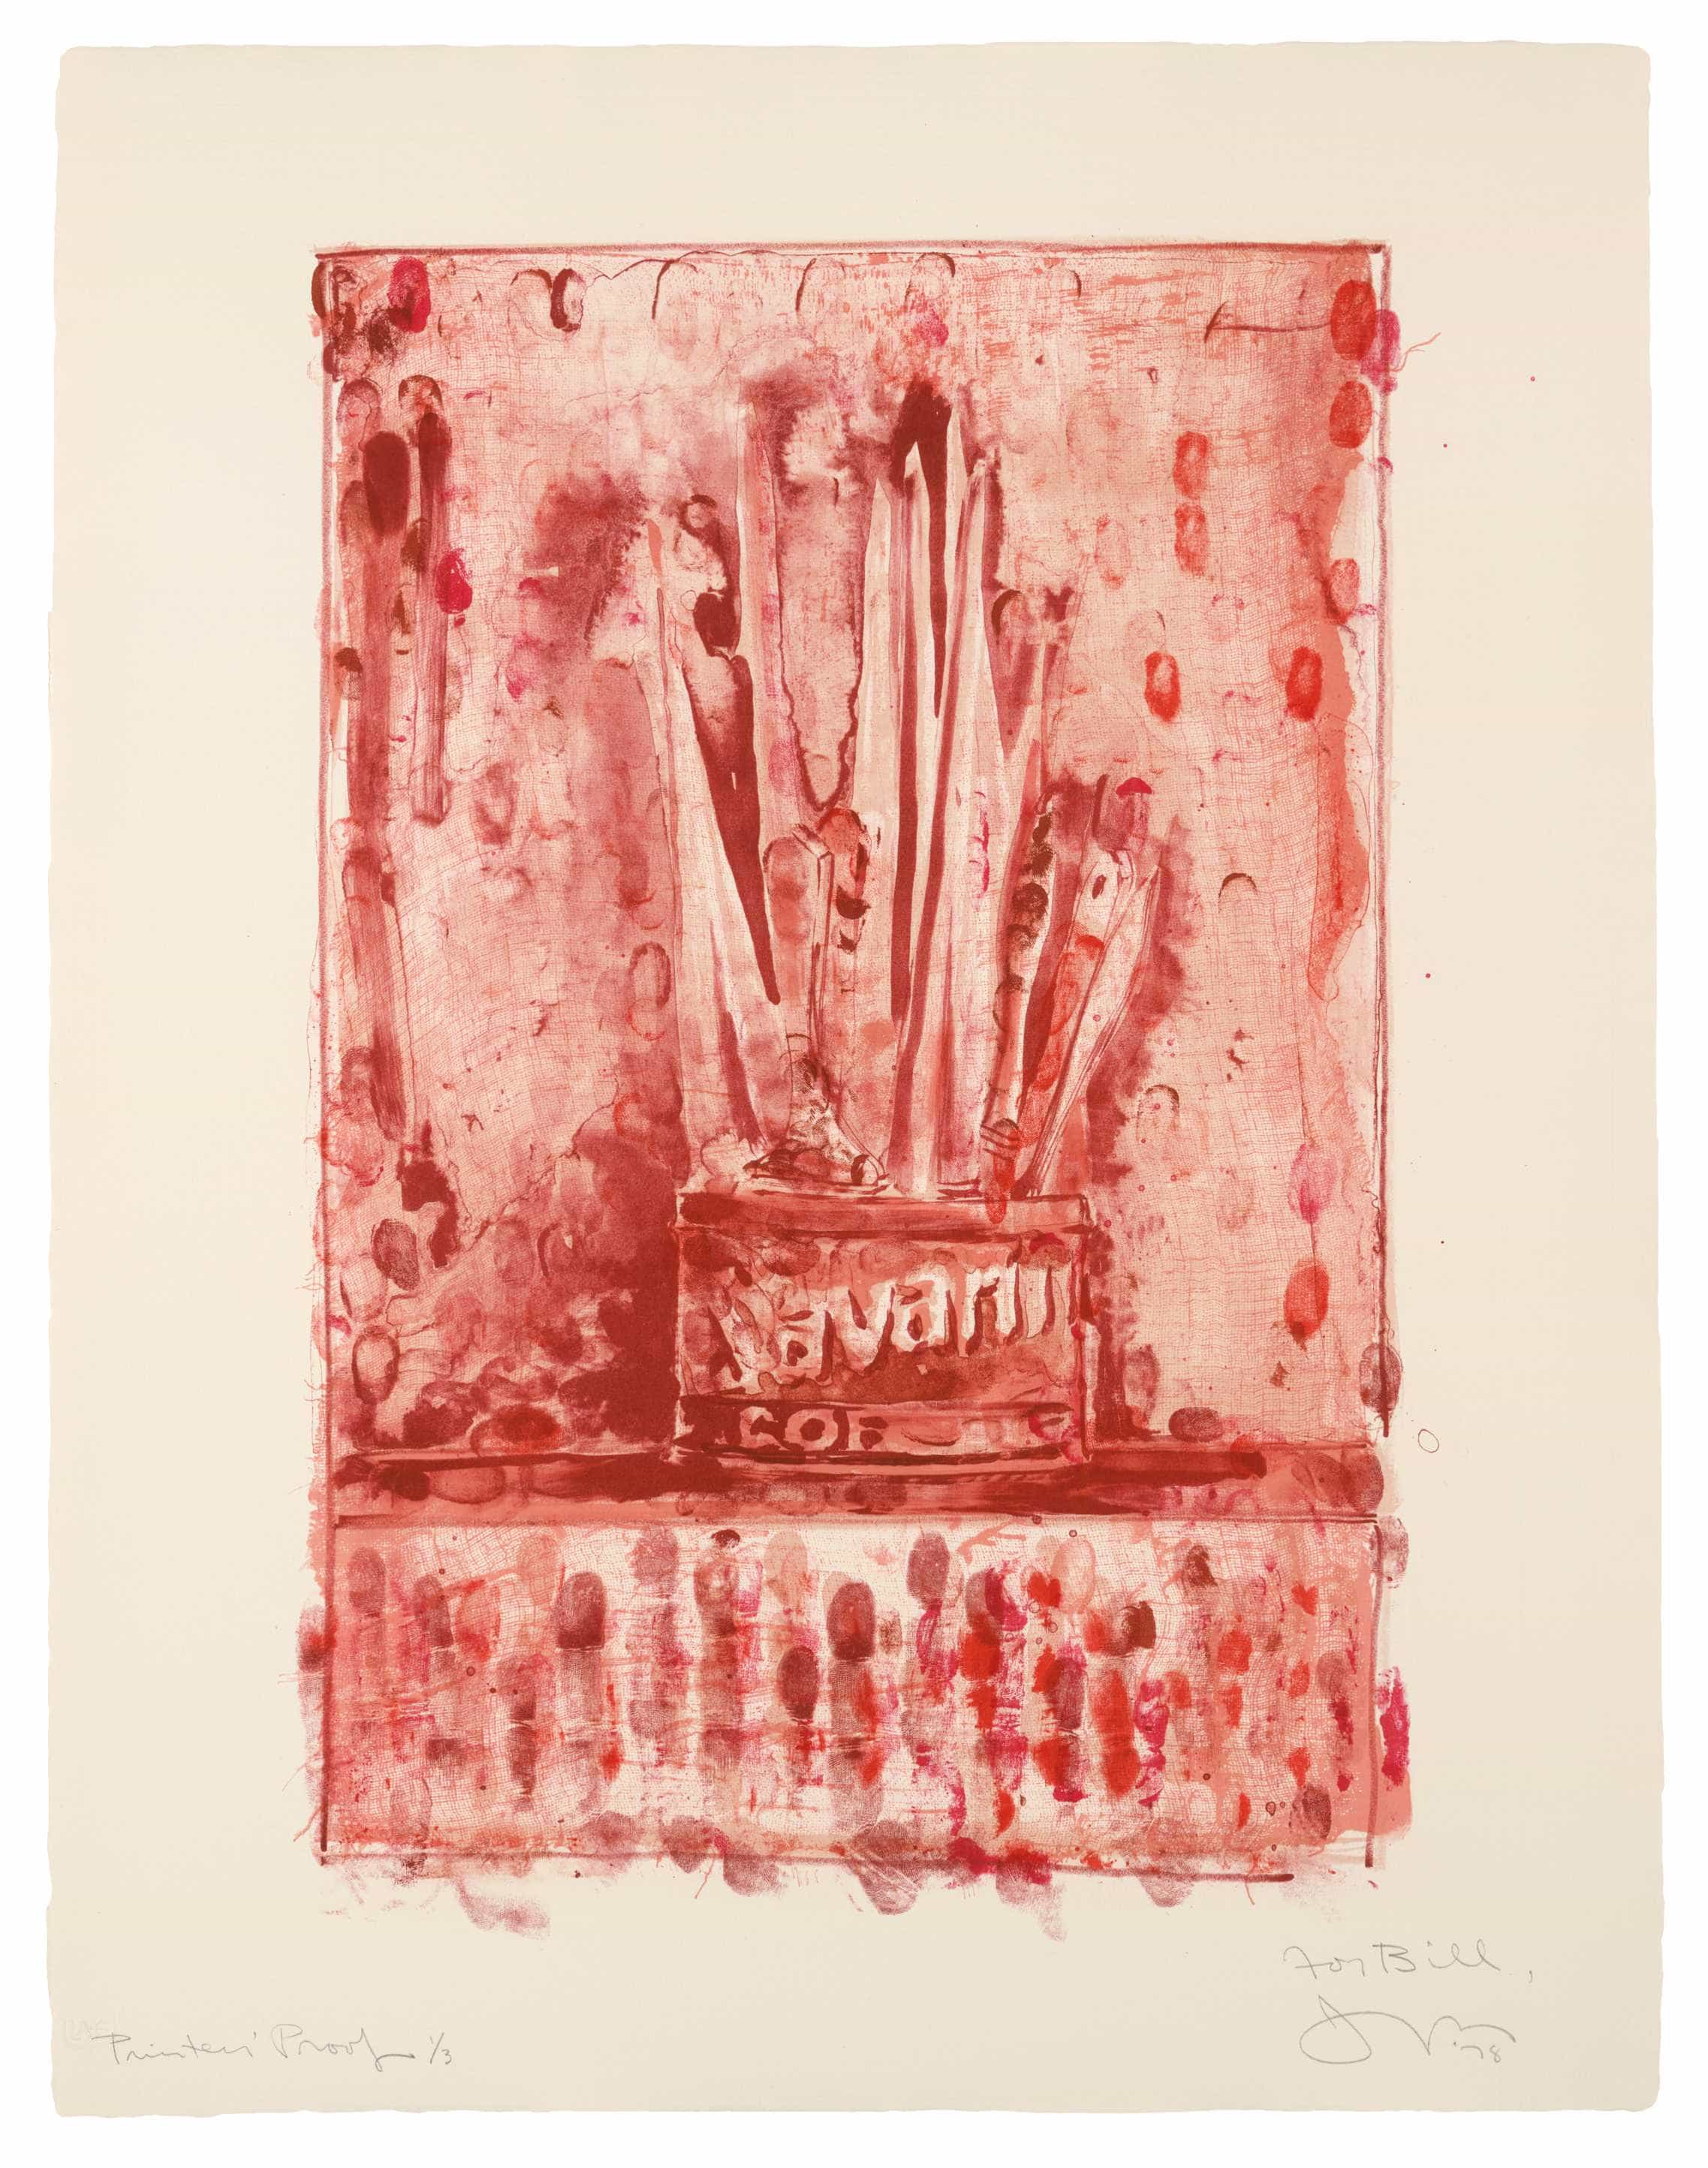 Jasper Johns, Savarin 3 (Red), 1978